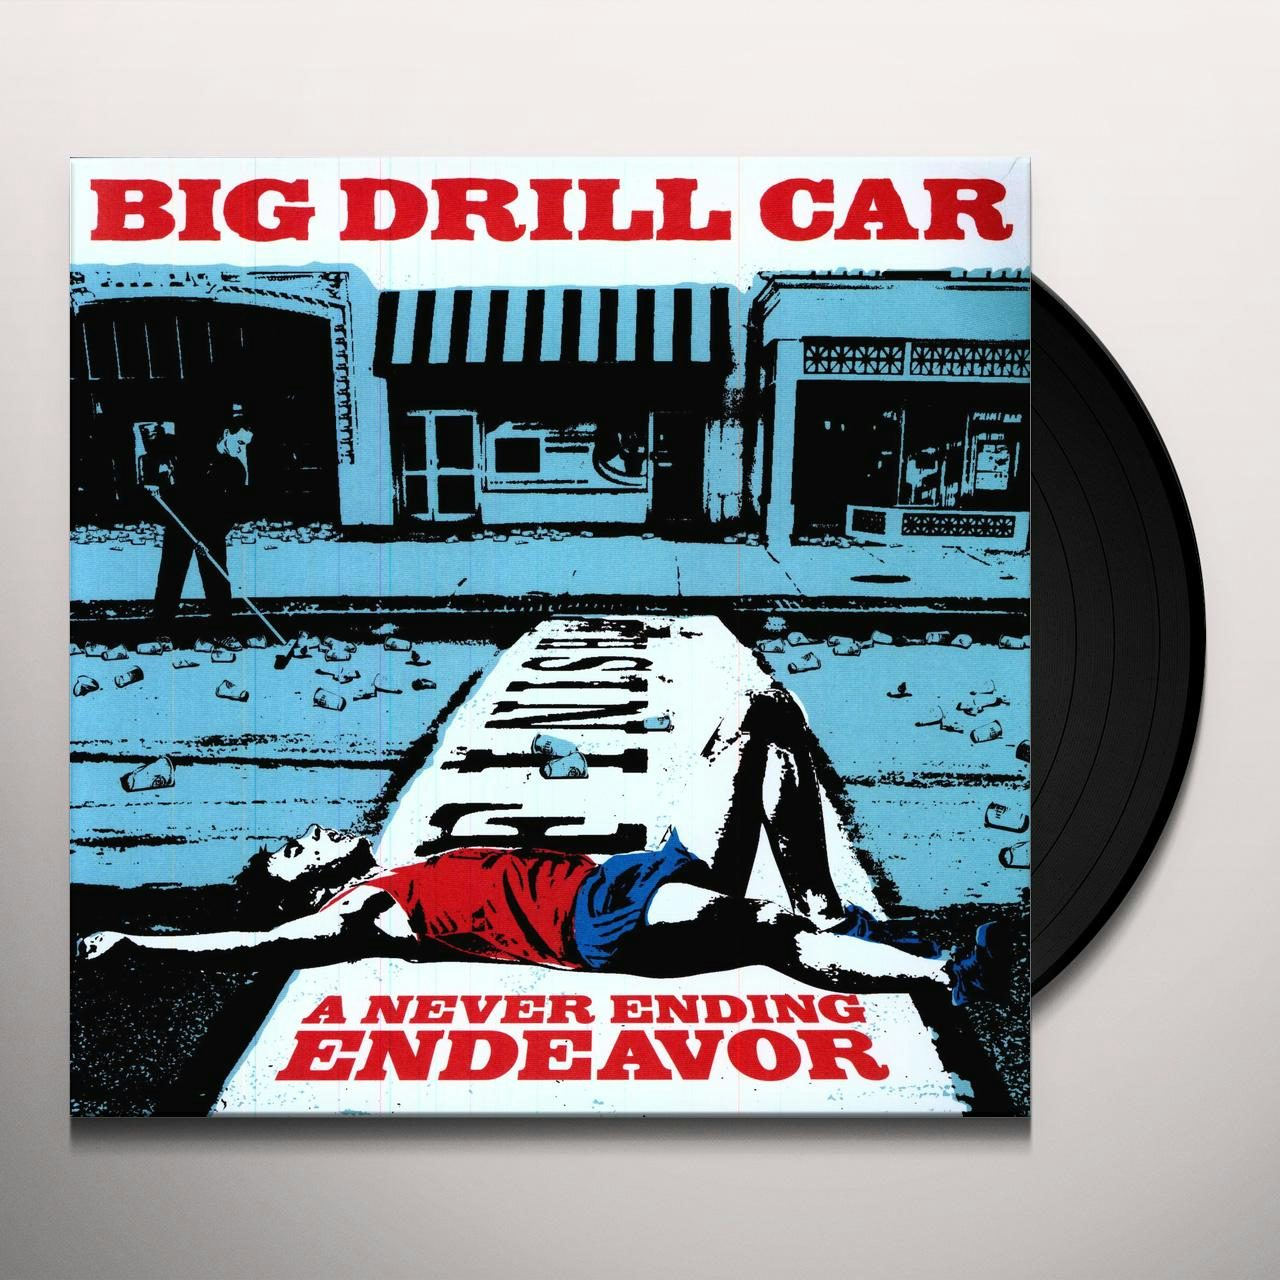 NEVER ENDING ENDEAVOUR Vinyl Record - Big Drill Car